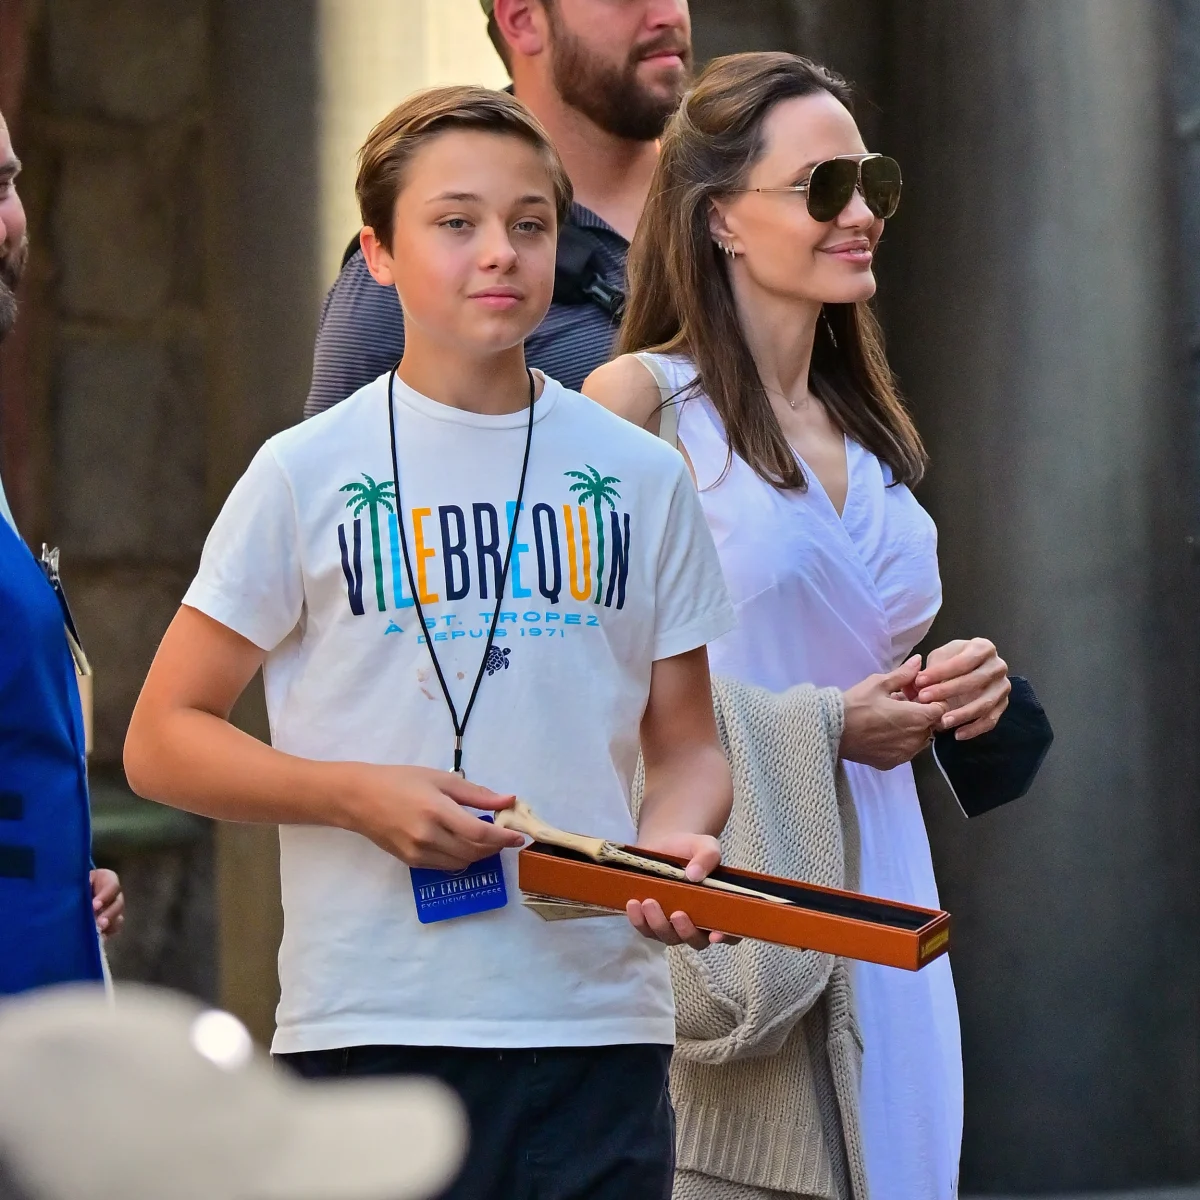 Knox JoliePitt, Son Of Angelina Jolie And Brad Pitt